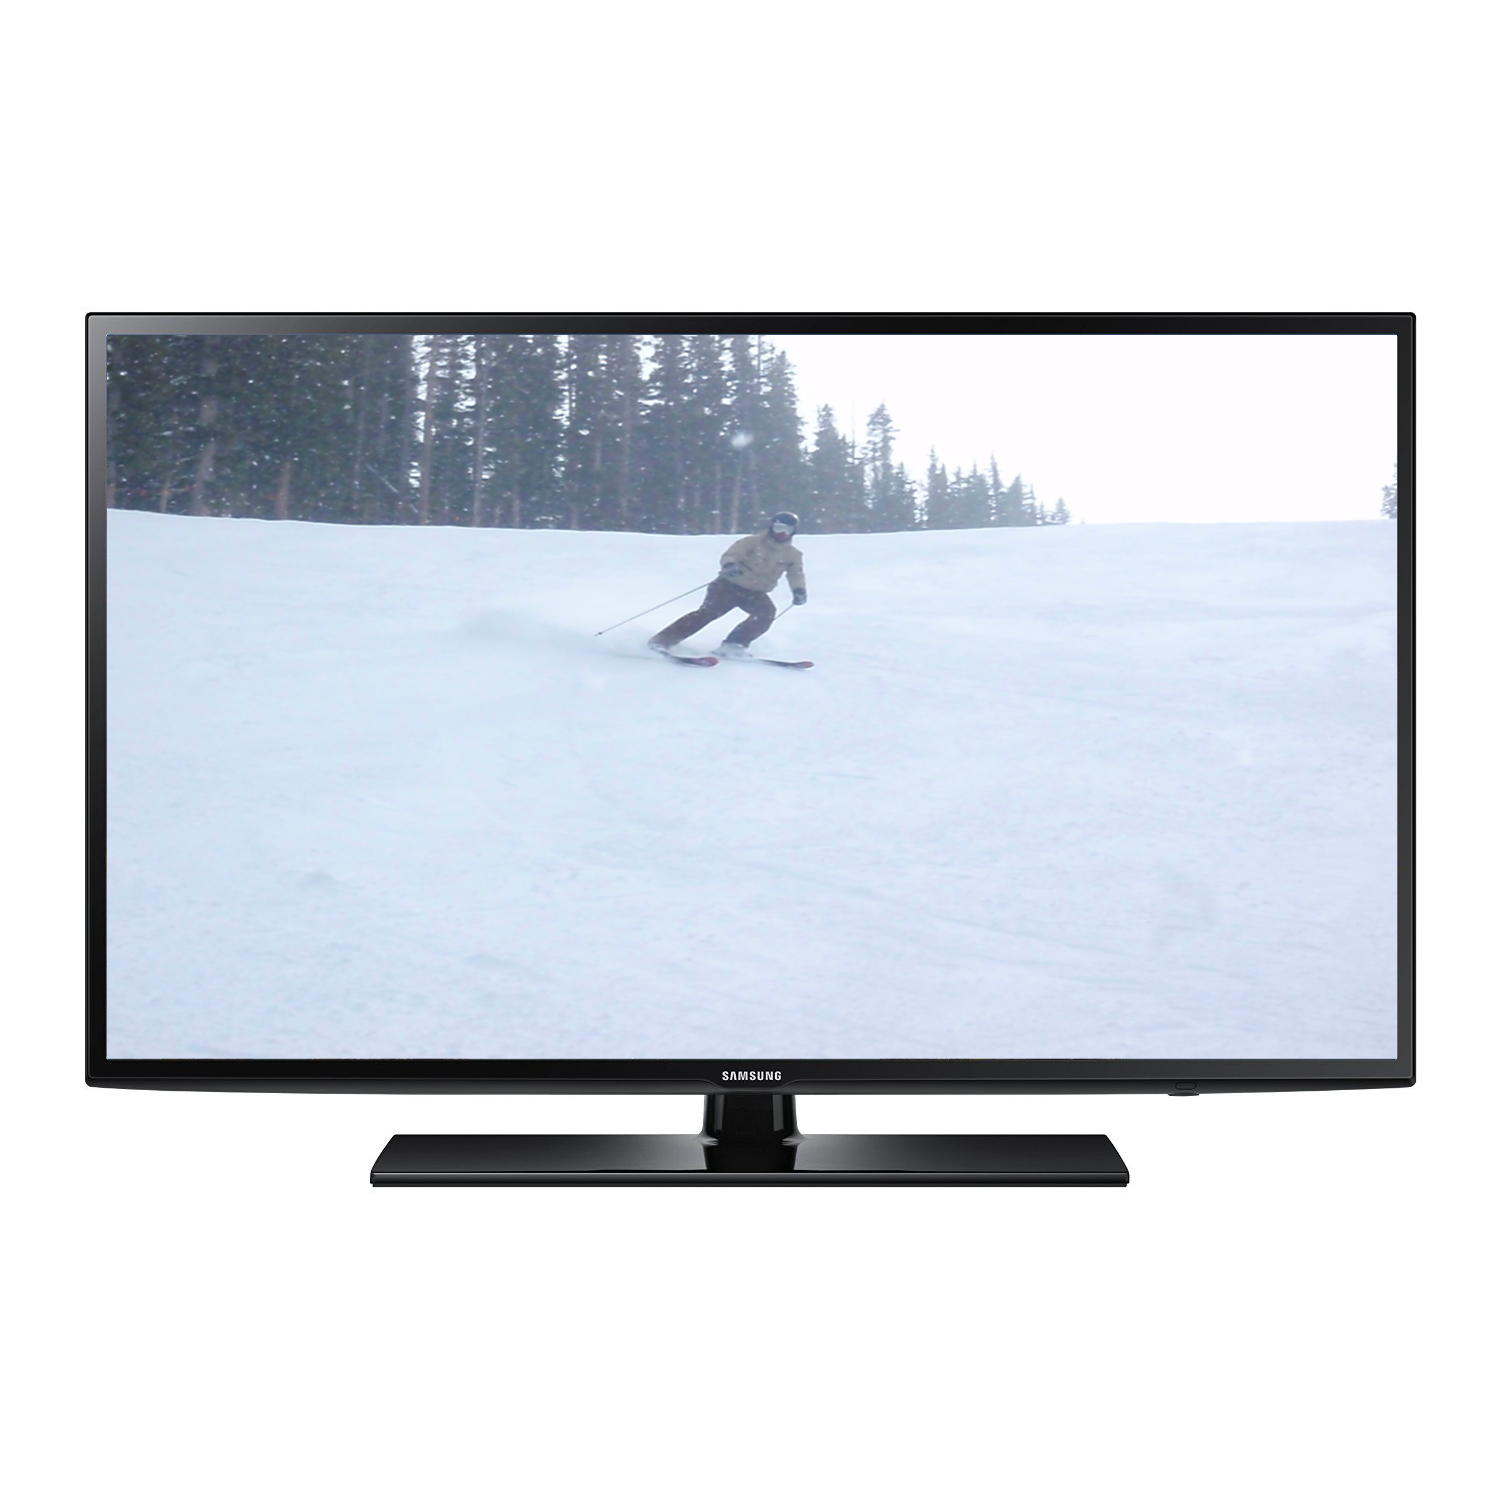 Samsung Refurbished 65" Class 1080p LED Smart HDTV - UN65J6200